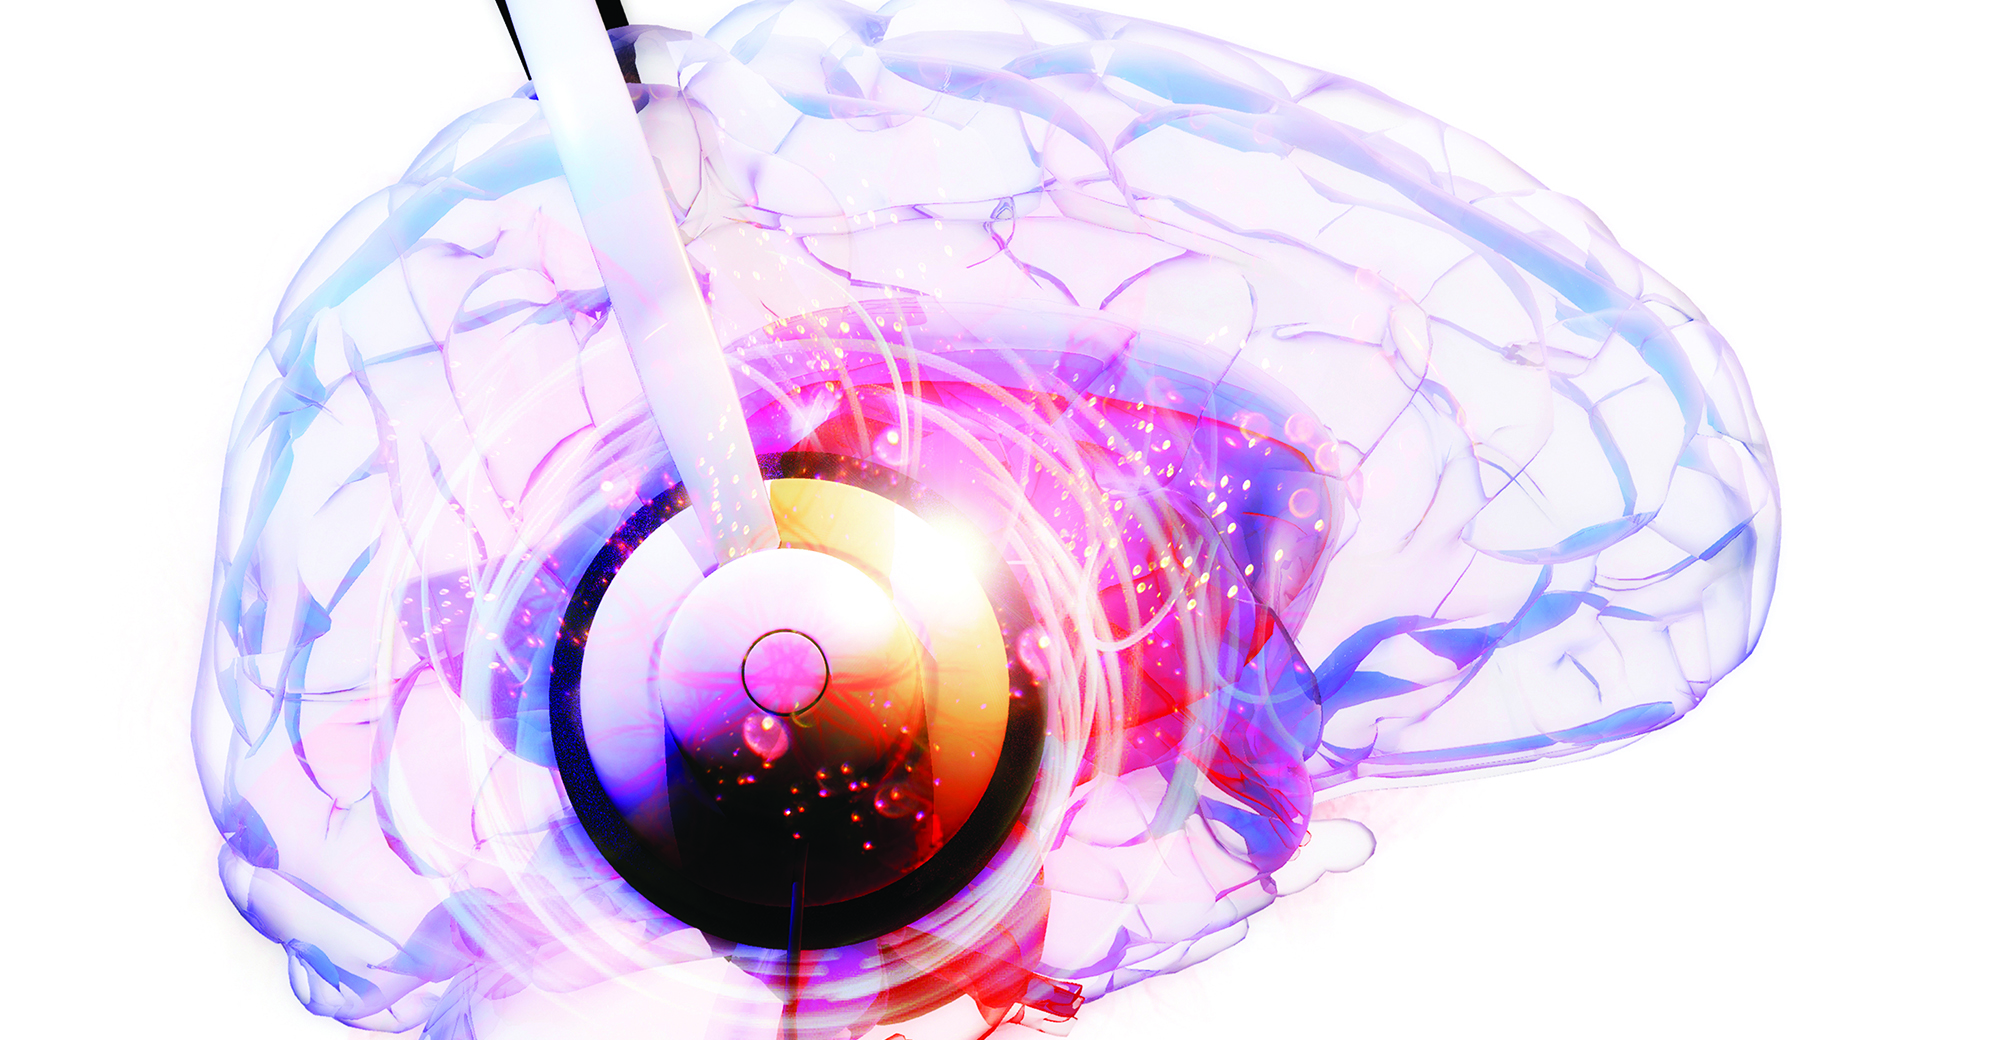 Brain sound. Музыкальный мозг. Звук и мозг. Мозг с наушниками. Музыкальная фармакология.